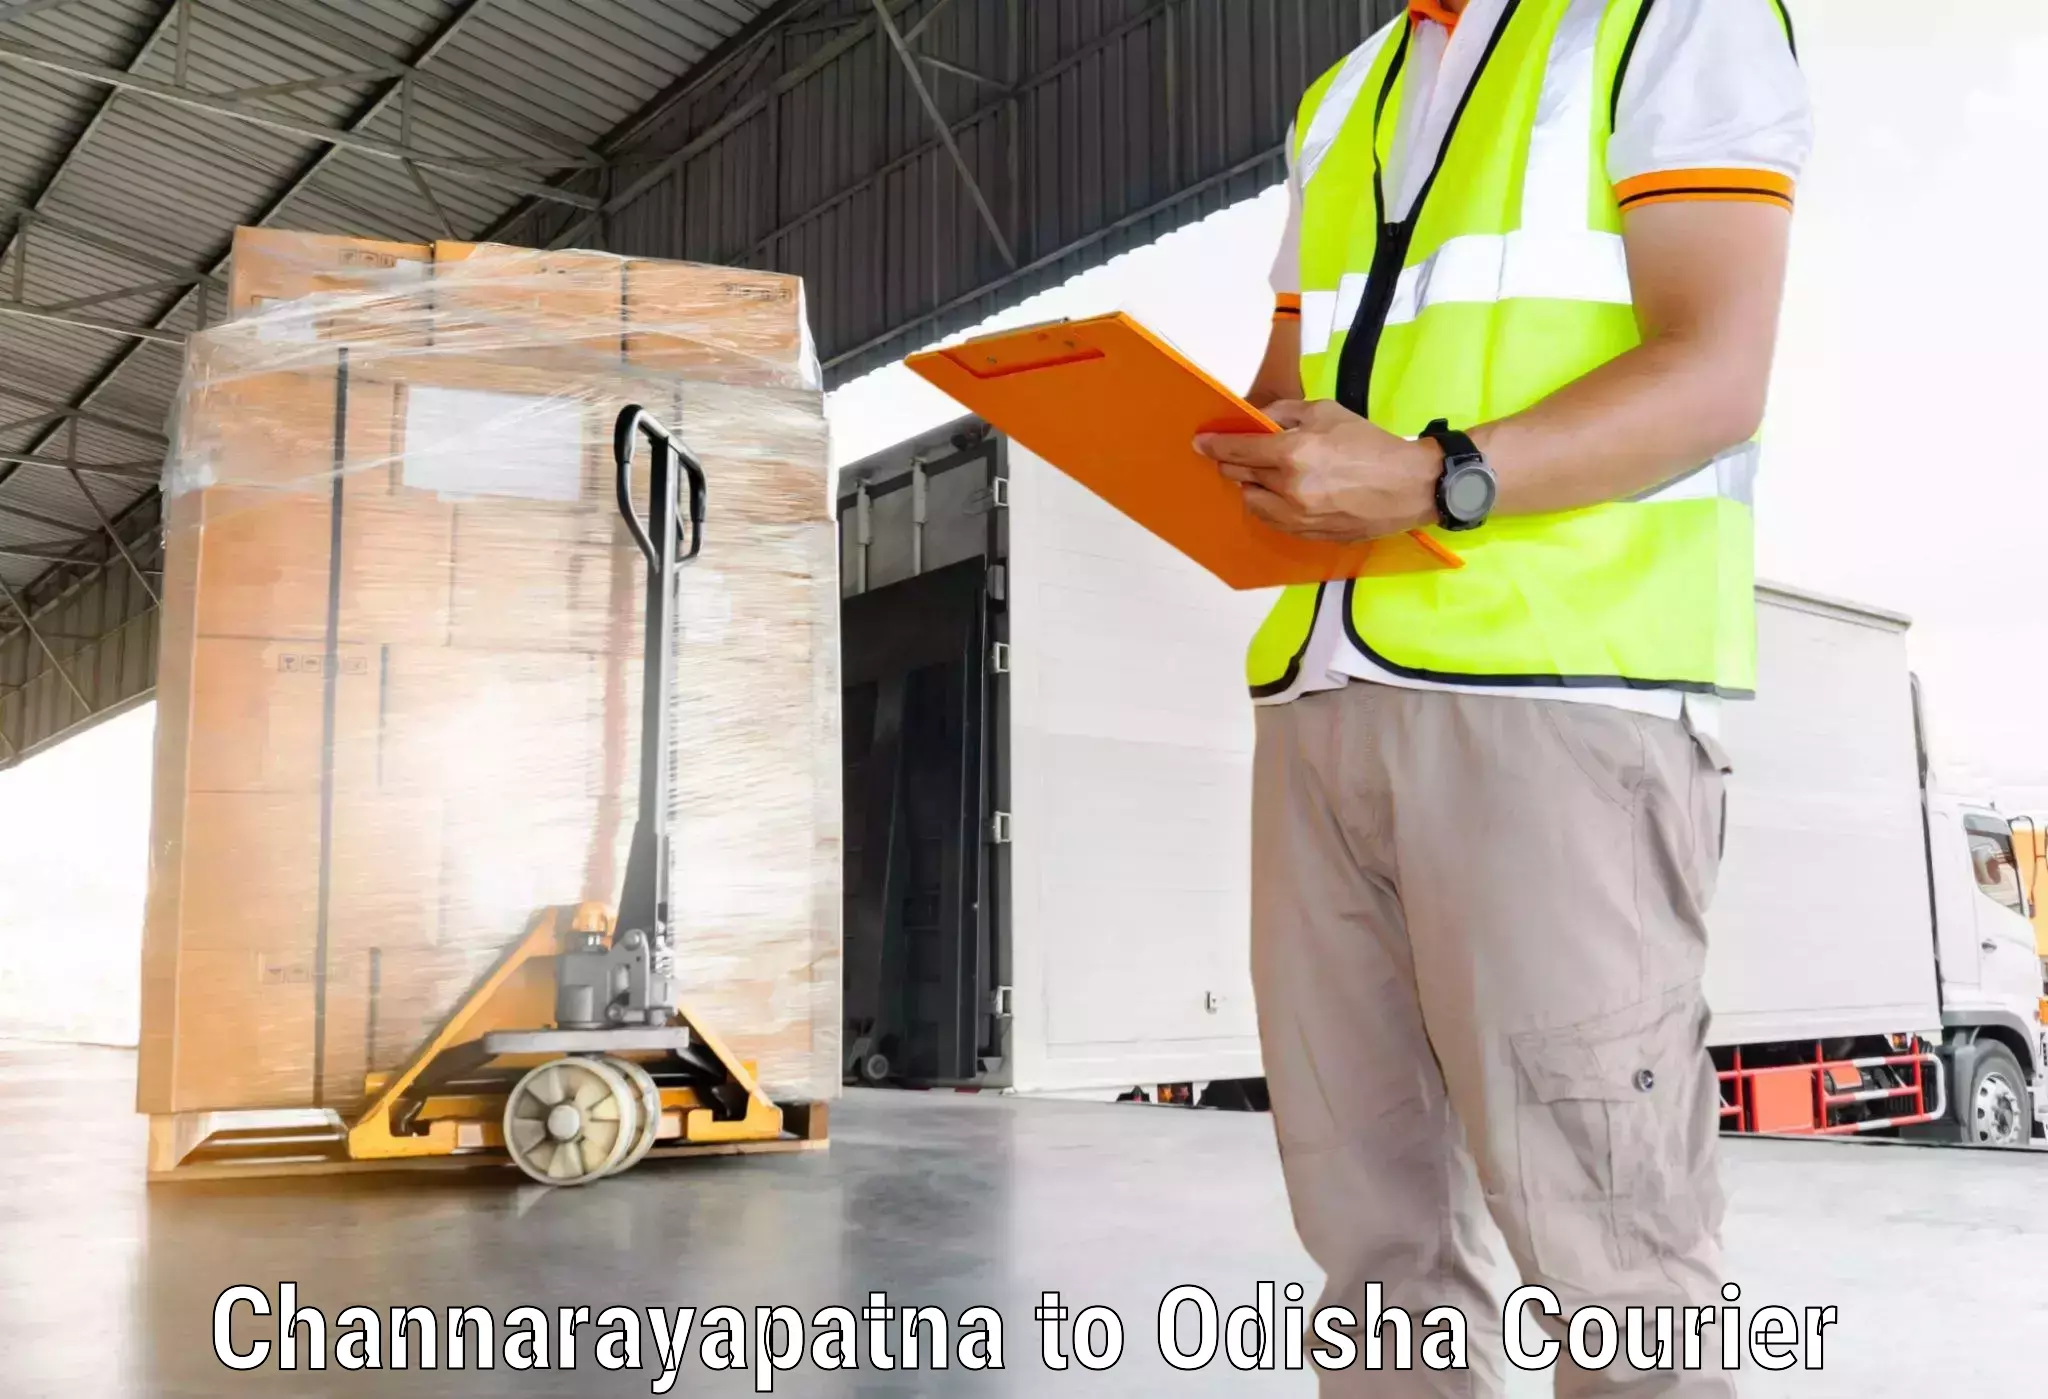 Professional courier handling Channarayapatna to Chandinchowk